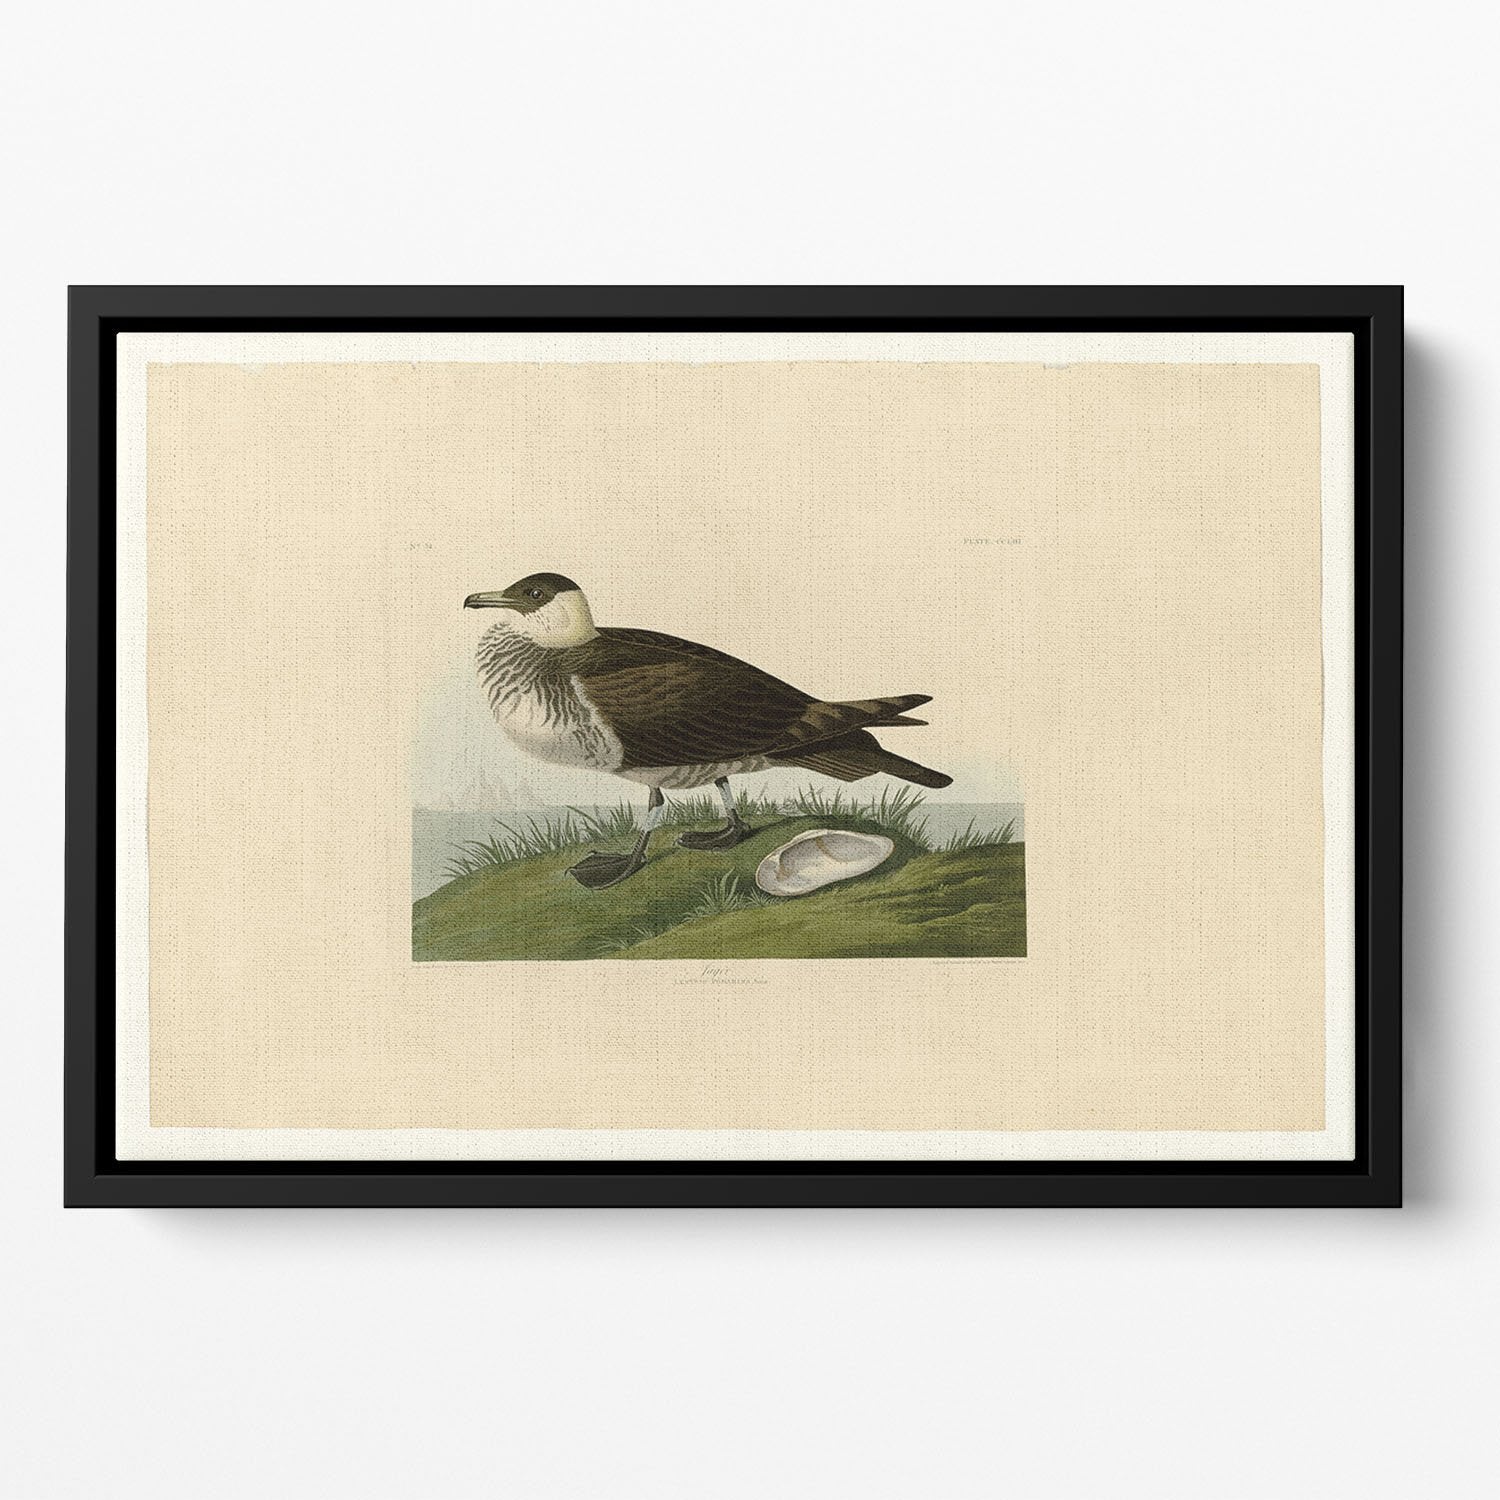 Jager by Audubon Floating Framed Canvas